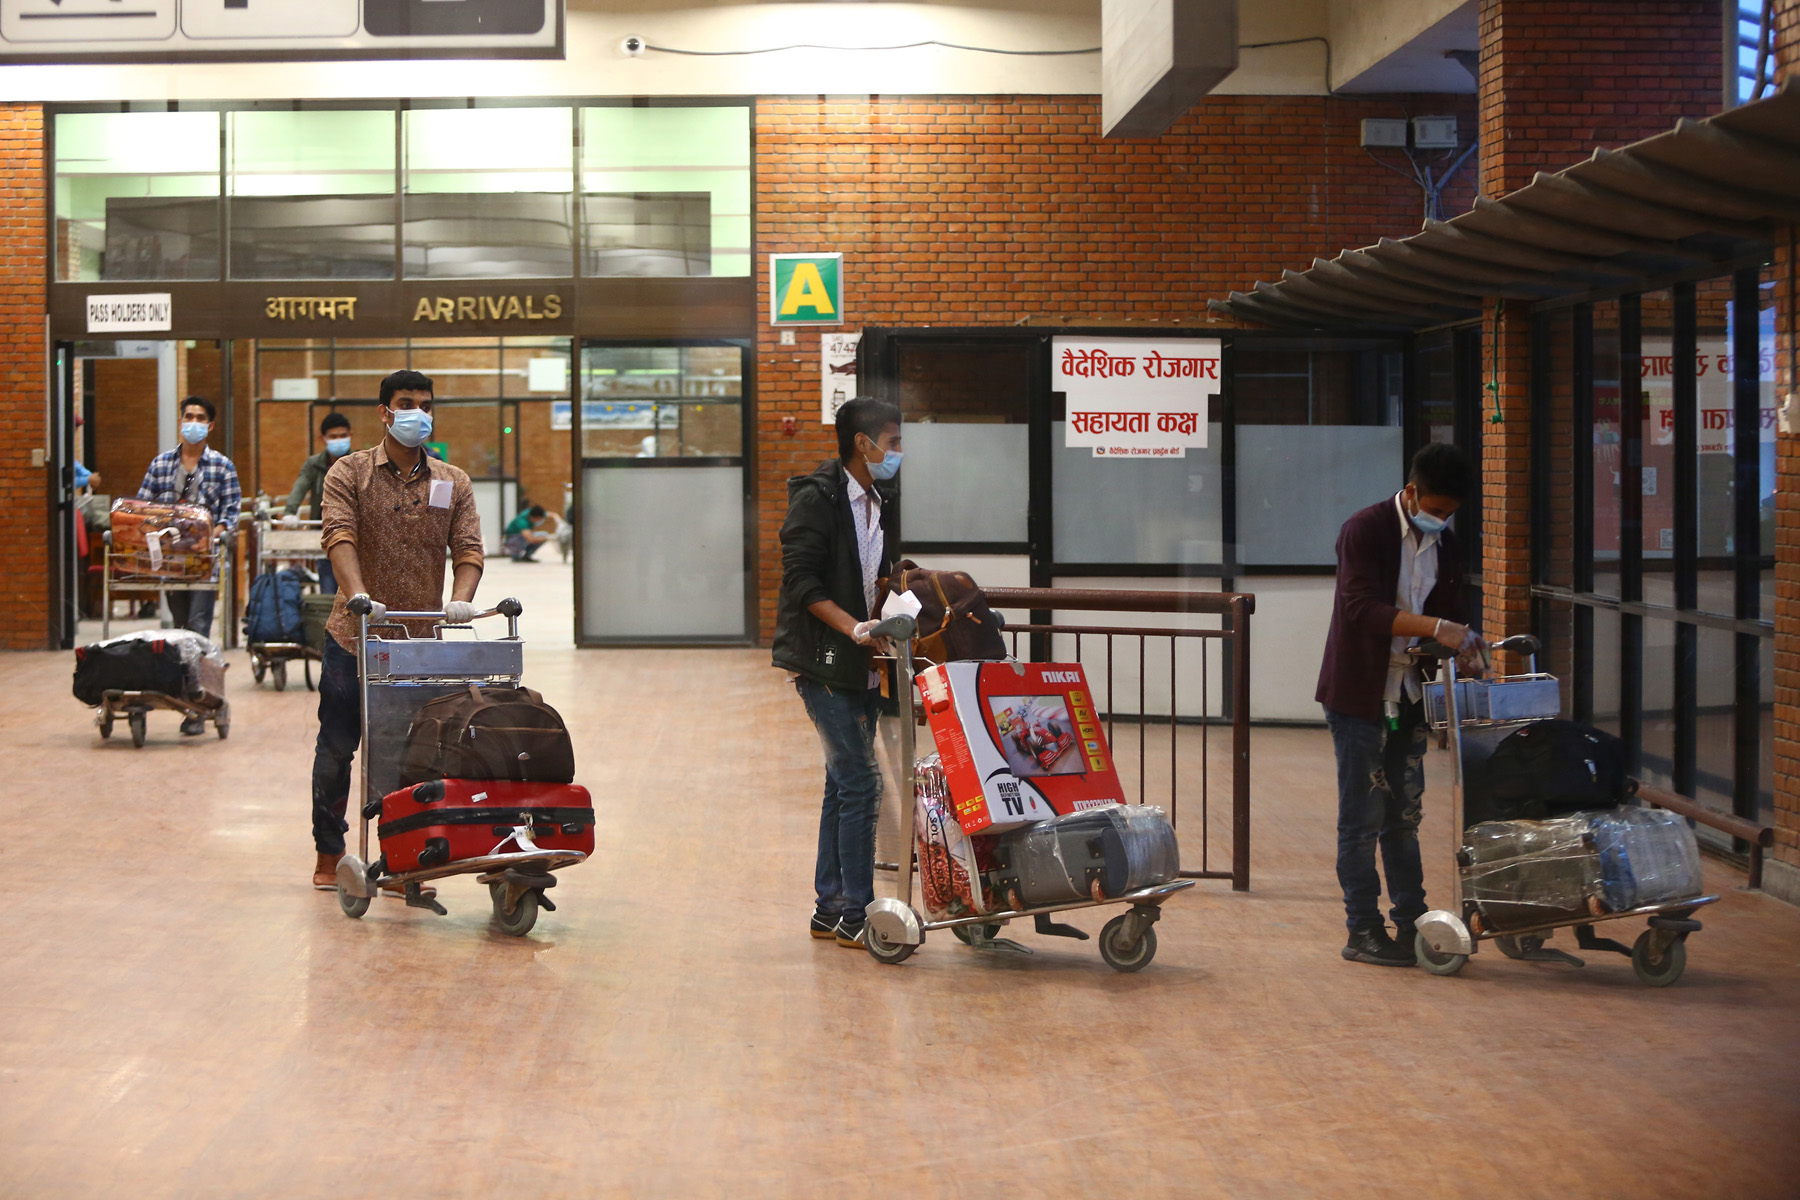 Over 13,000 Nepalis return home from UAE